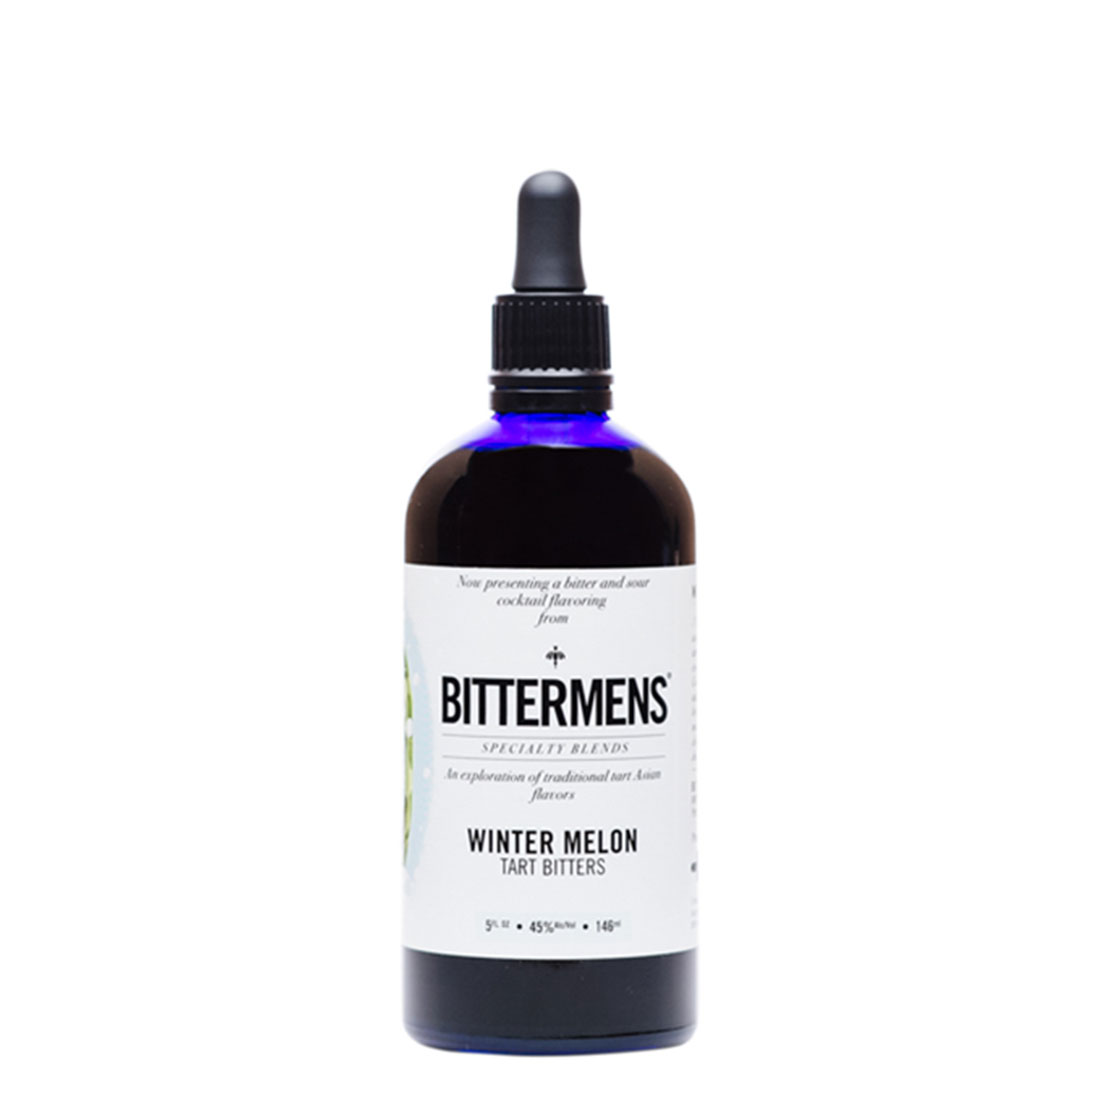 LB_Bottle-Bittermens-Winter-Melon-Bitters